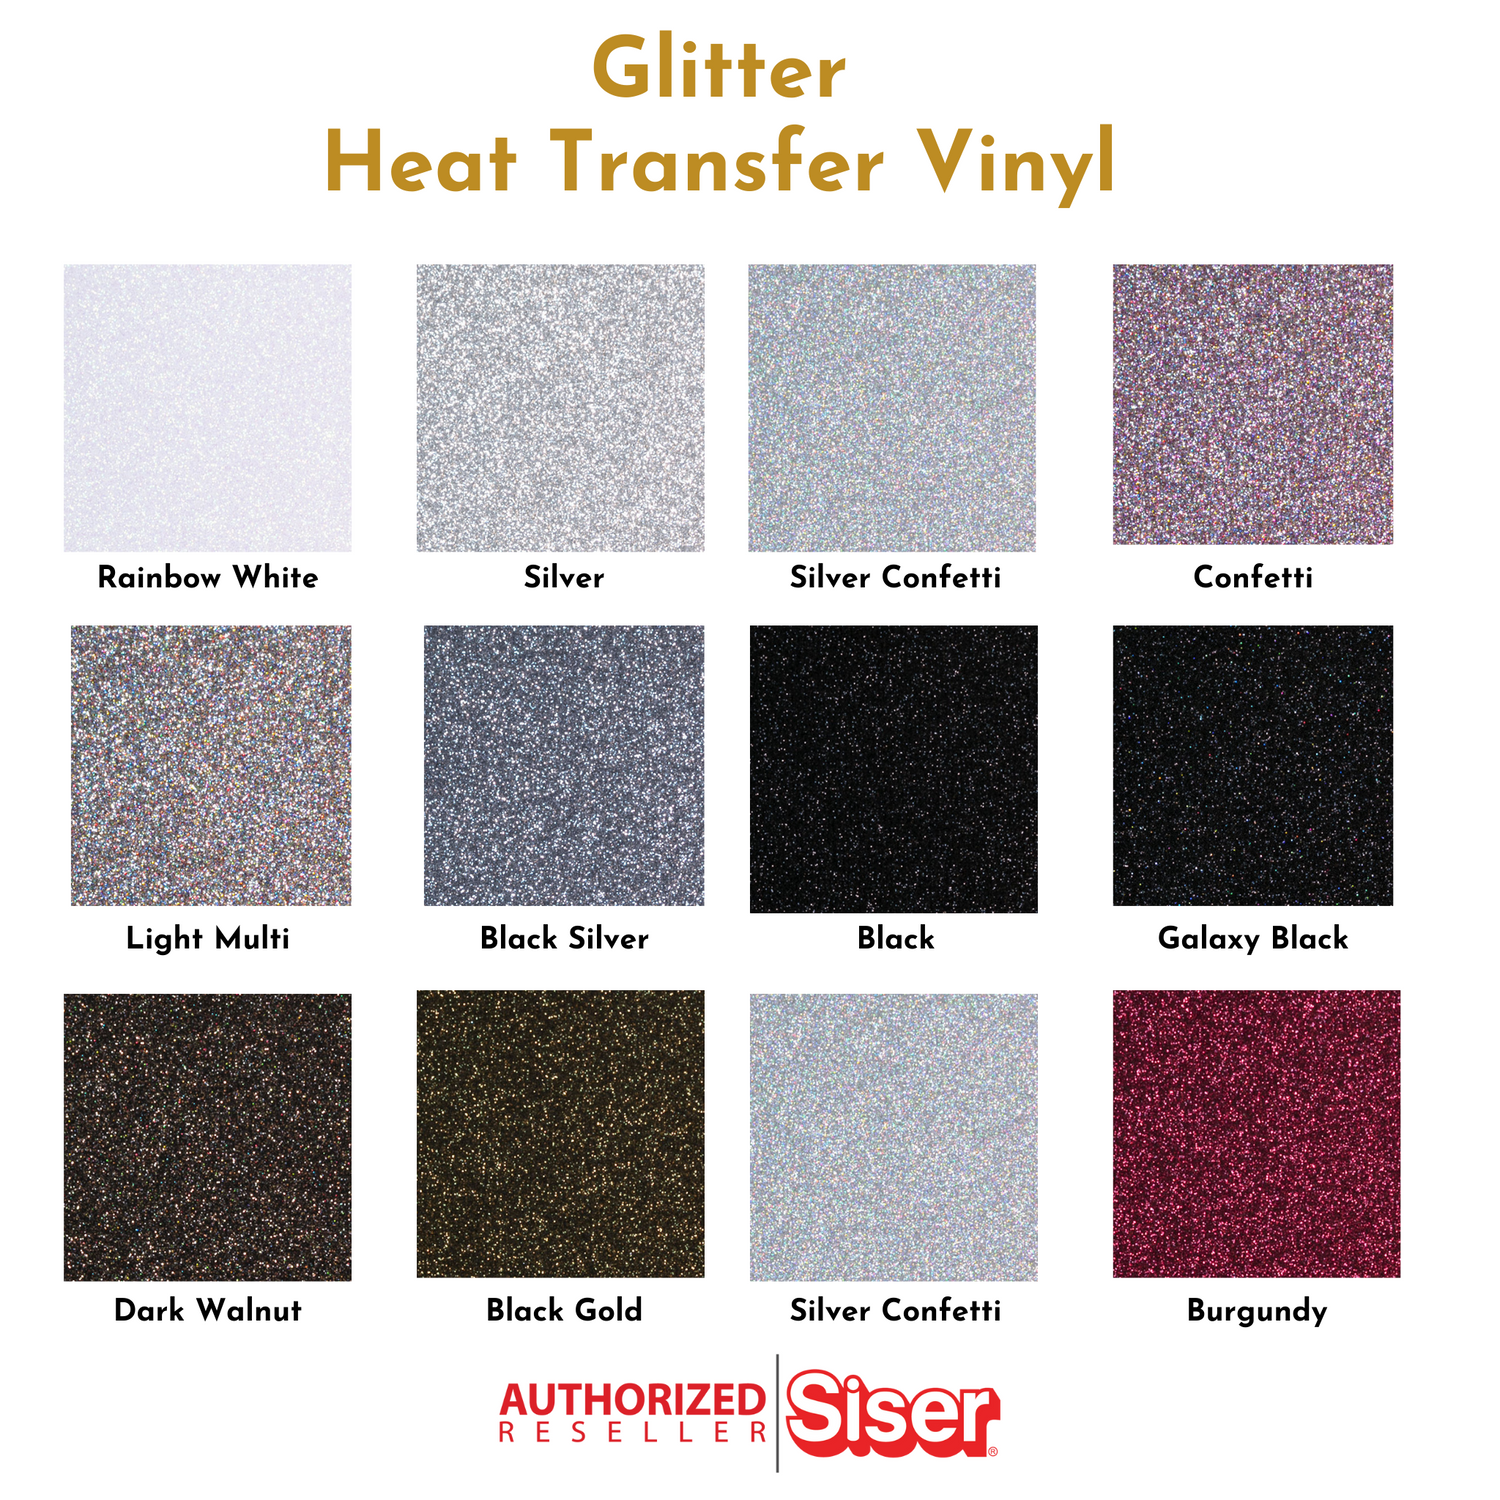 Black Glitter Heat Transfer Vinyl